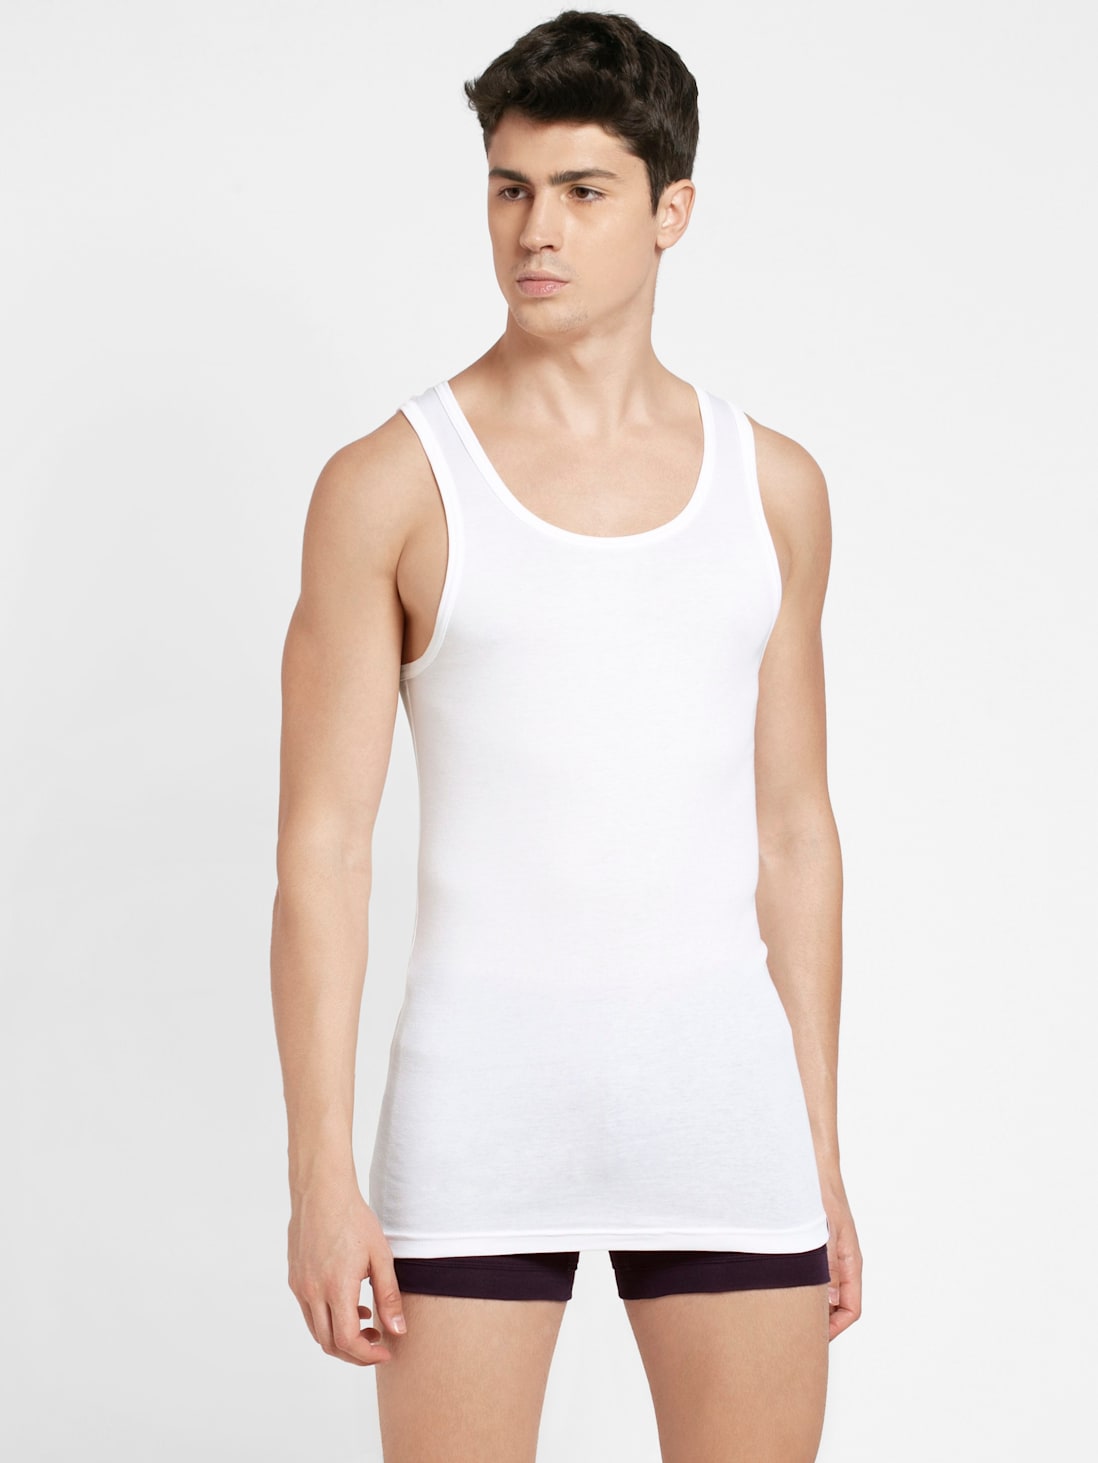 Buy Men's TENCEL Micro Modal Cotton Rib Sleeveless Vest with Extended Length  for Easy Tuck - White IC13